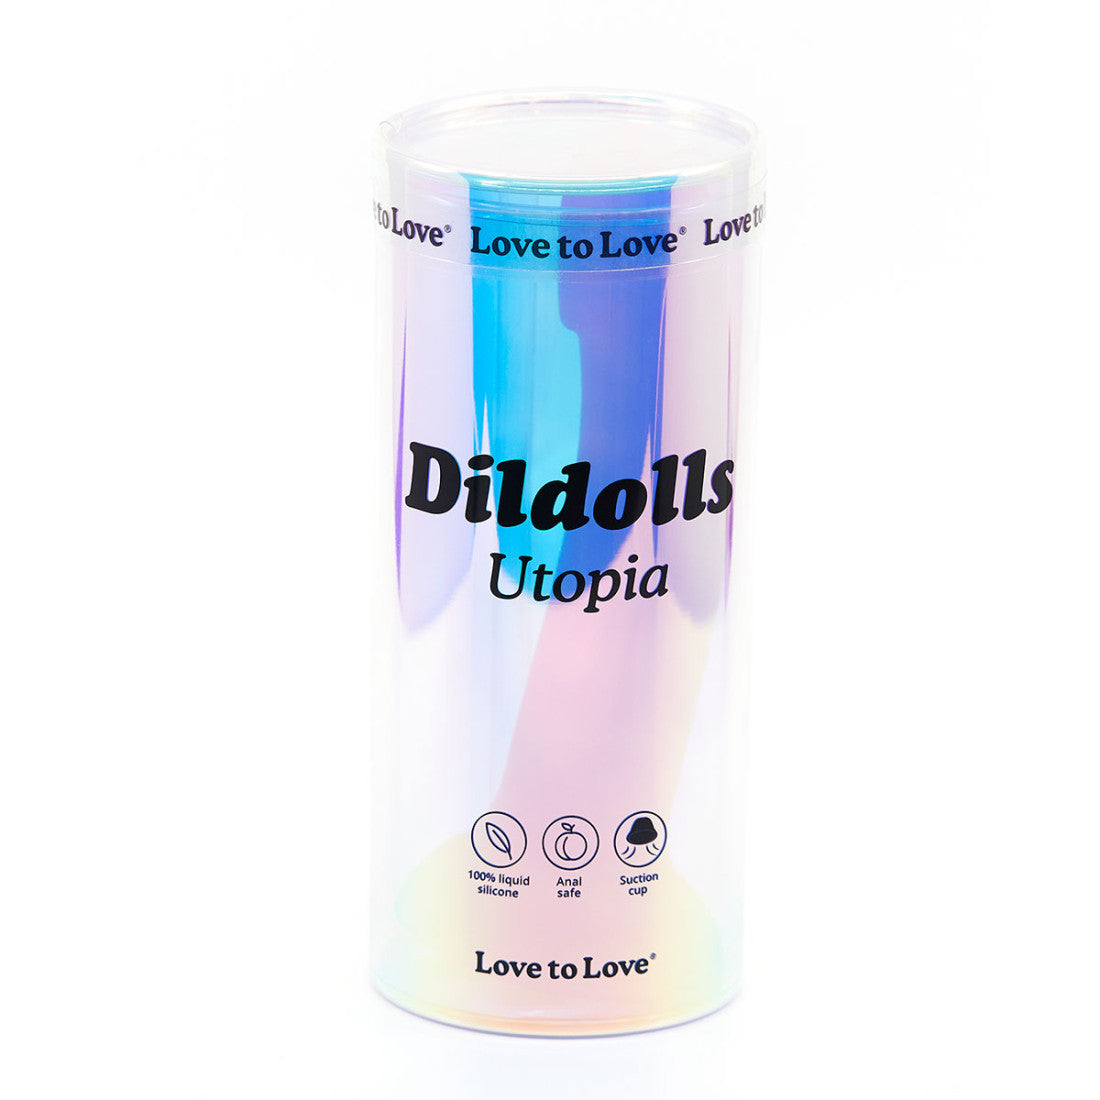 Utopia dildoll iridescent packaging